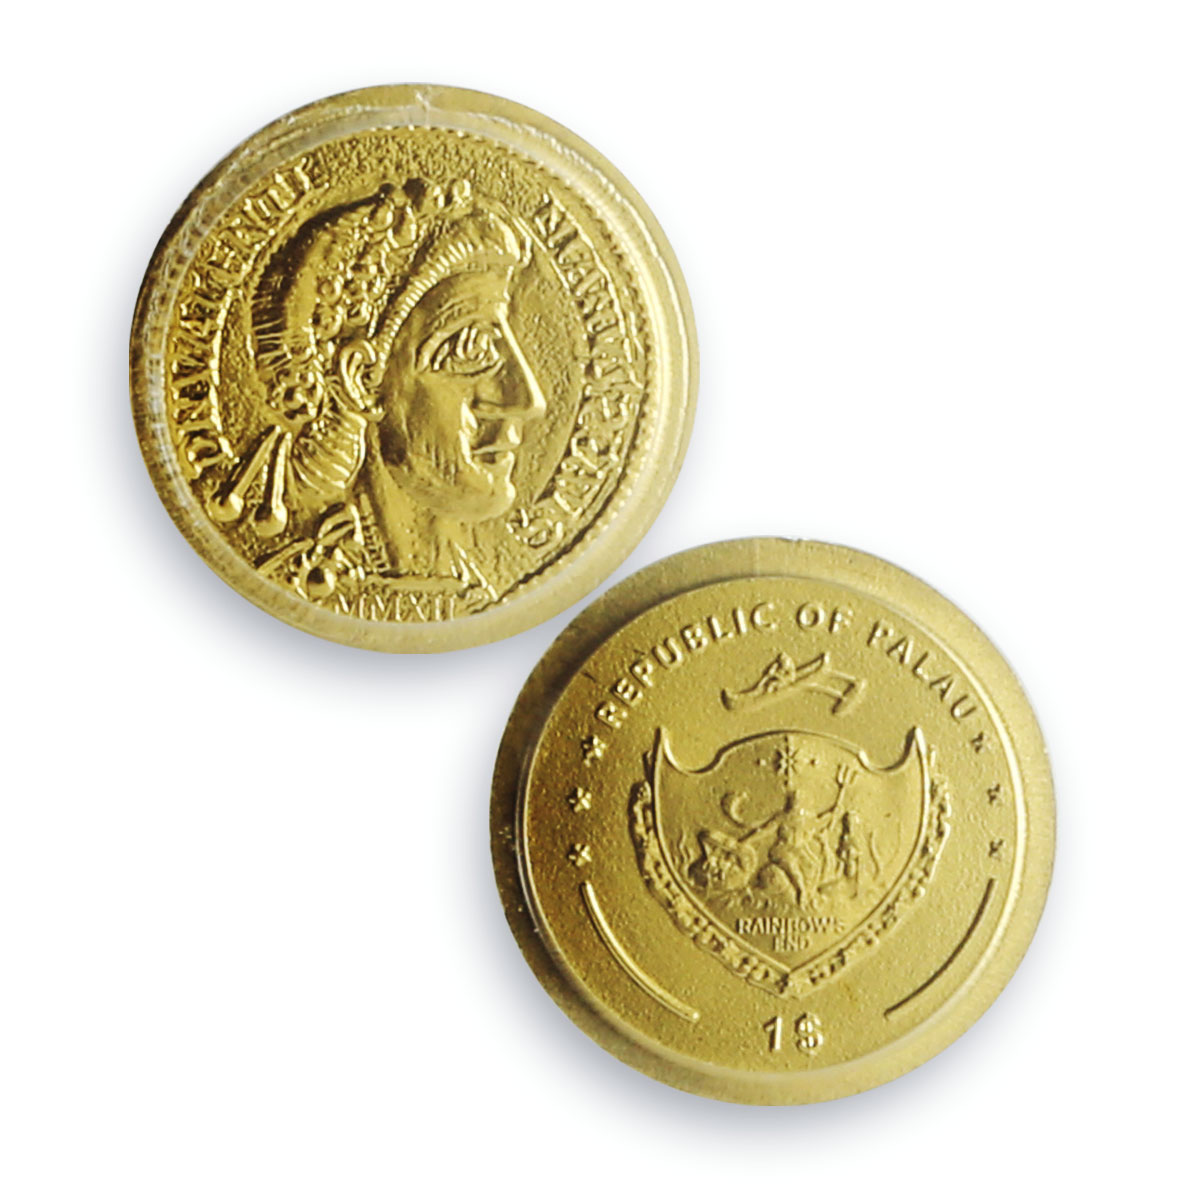 Palau 1 dollar Rome Empire Emperor Valentinian Politics MS69 PCGS gold coin 2012